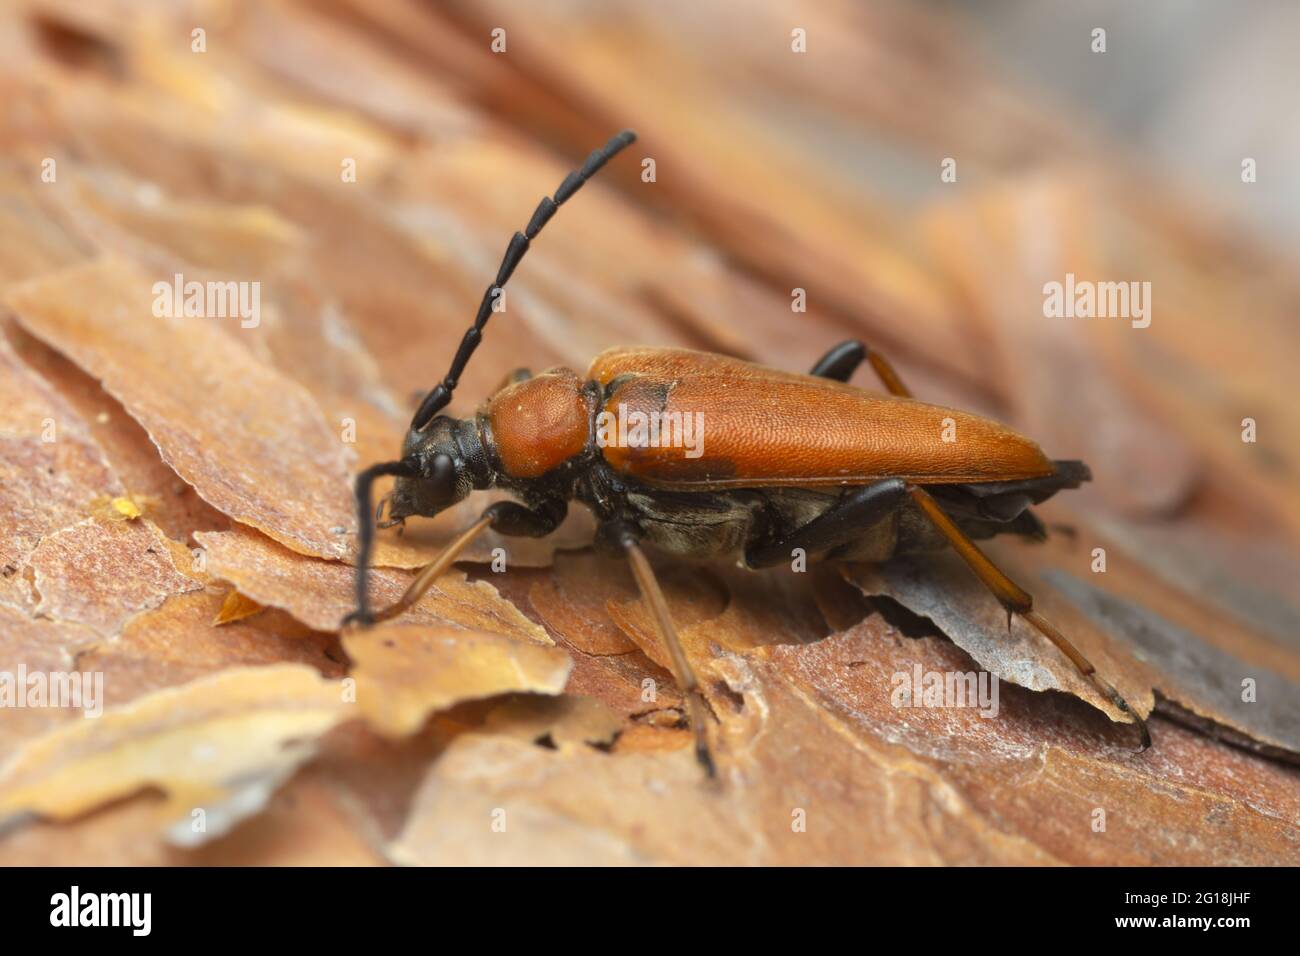 Female Red longhorn beetle, Leptura rubra on pine bark, macro photo Stock Photo